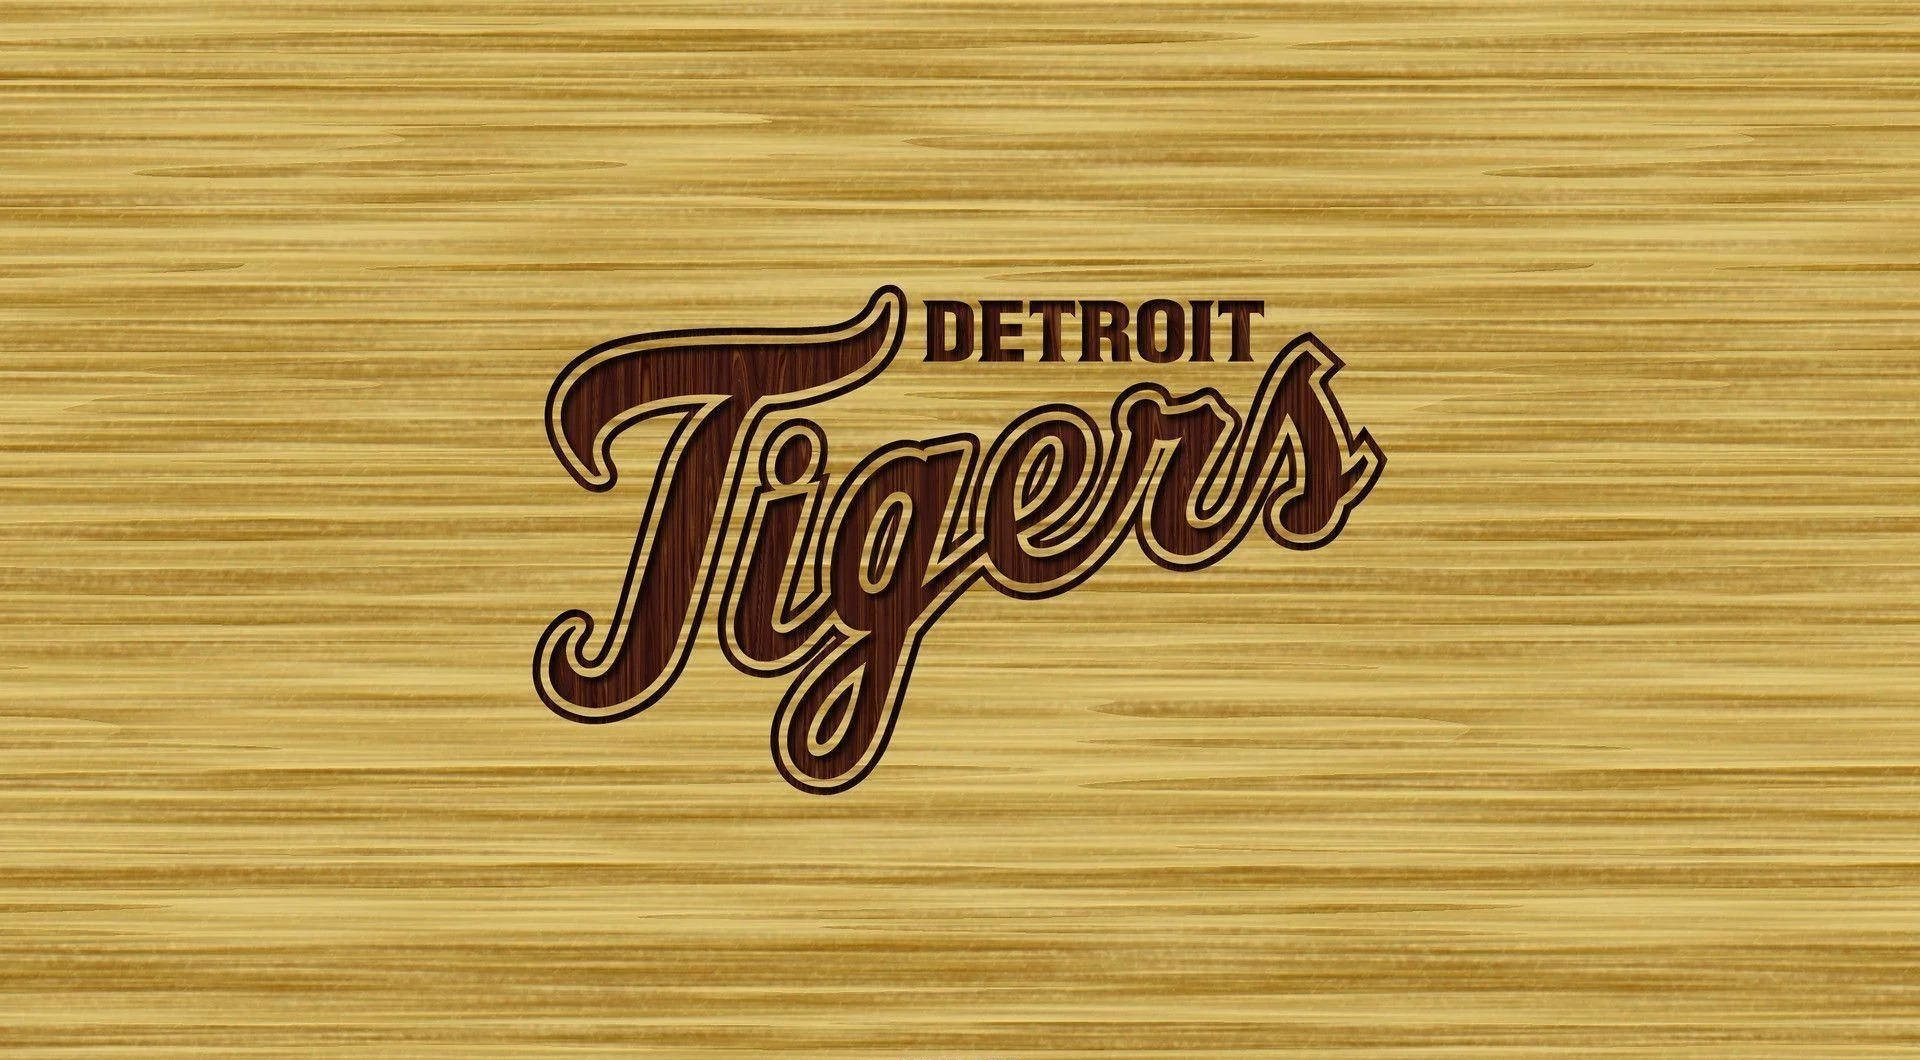 Fotos Do Detroit Tigers